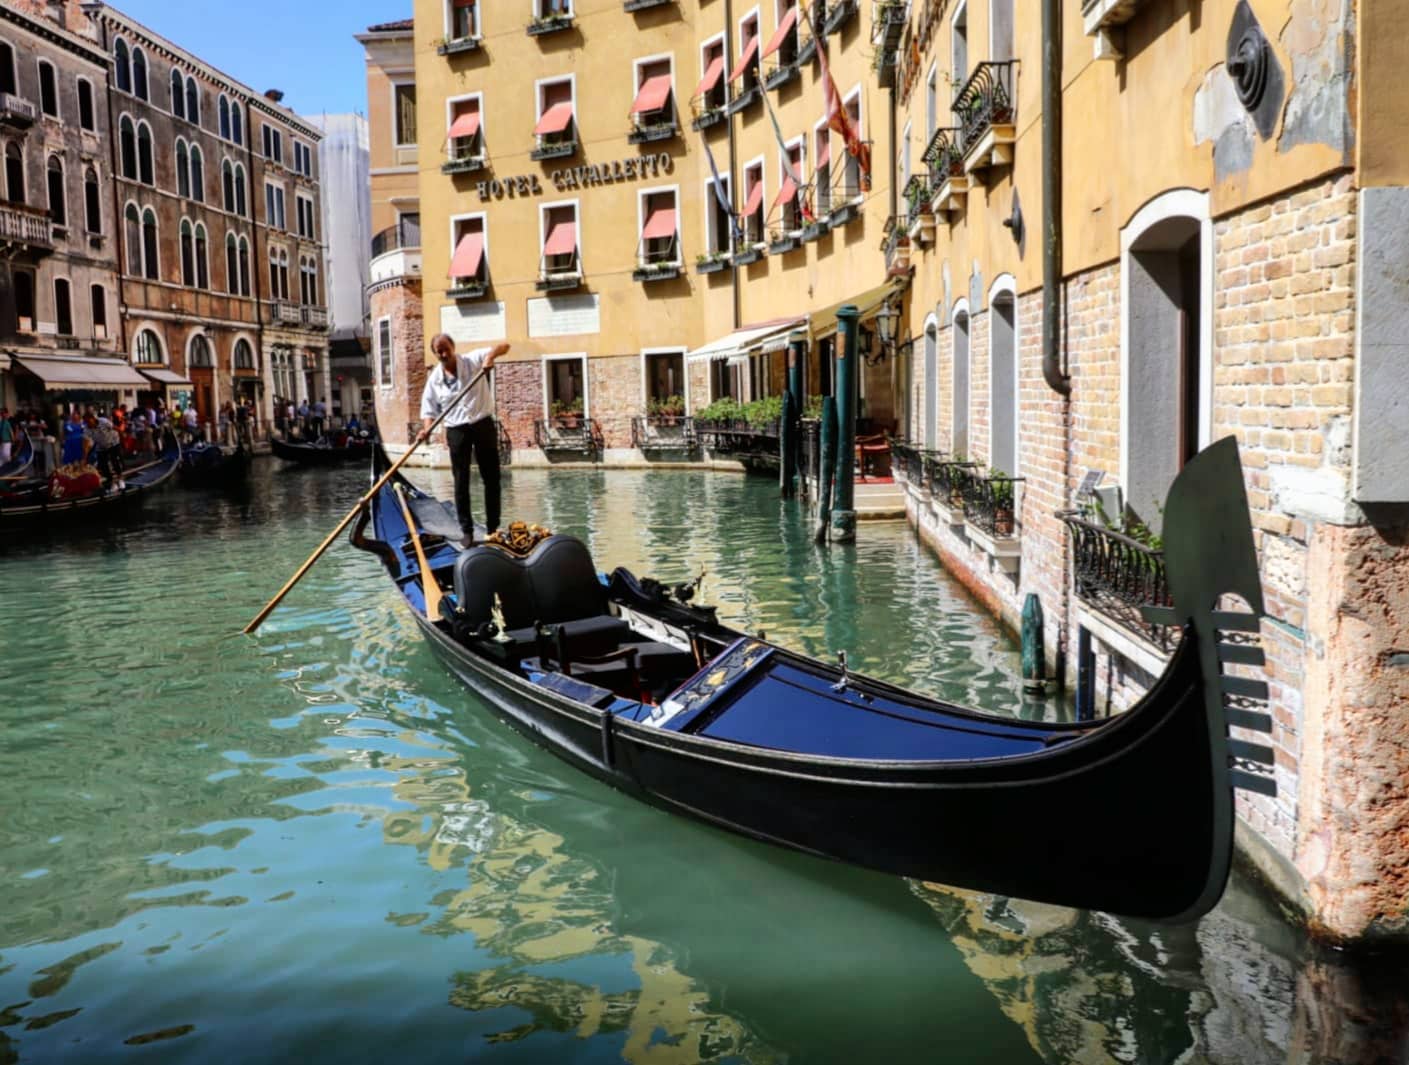 🎈 Bacino Orseolo, Venezia, Italy (Gondola)
.
#igersvenezia #igersvenice #ig_venezia #ig_venice #igersveneto #ig_veneto #yallersitalia #volgoitalia
.
Photo: @grtrsm